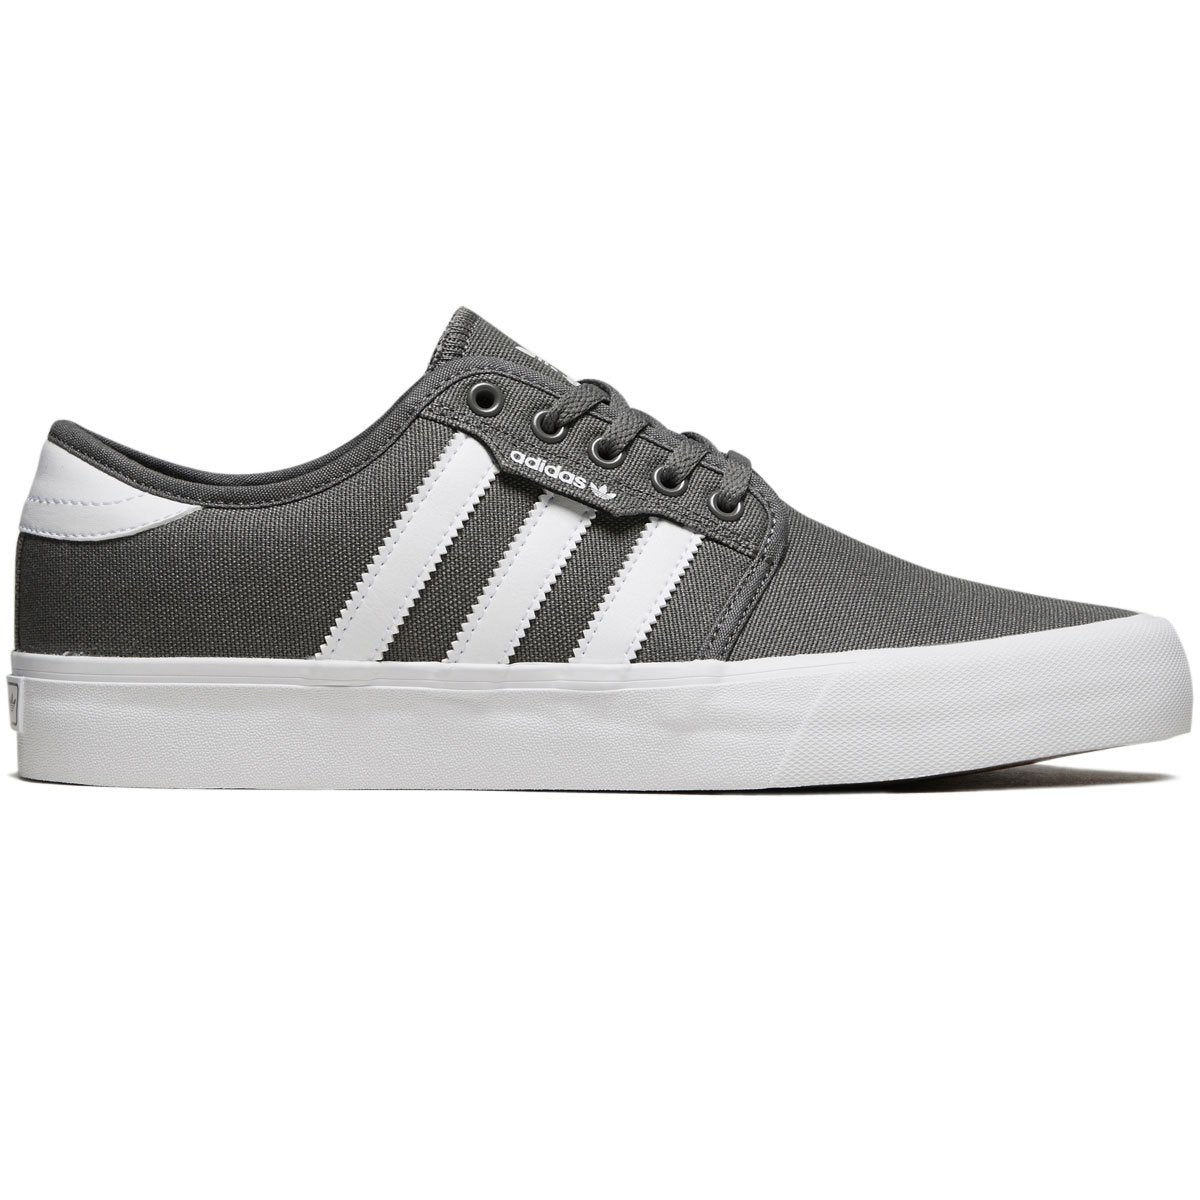 Adidas Seeley Xt Shoes - Grey/White/White image 1